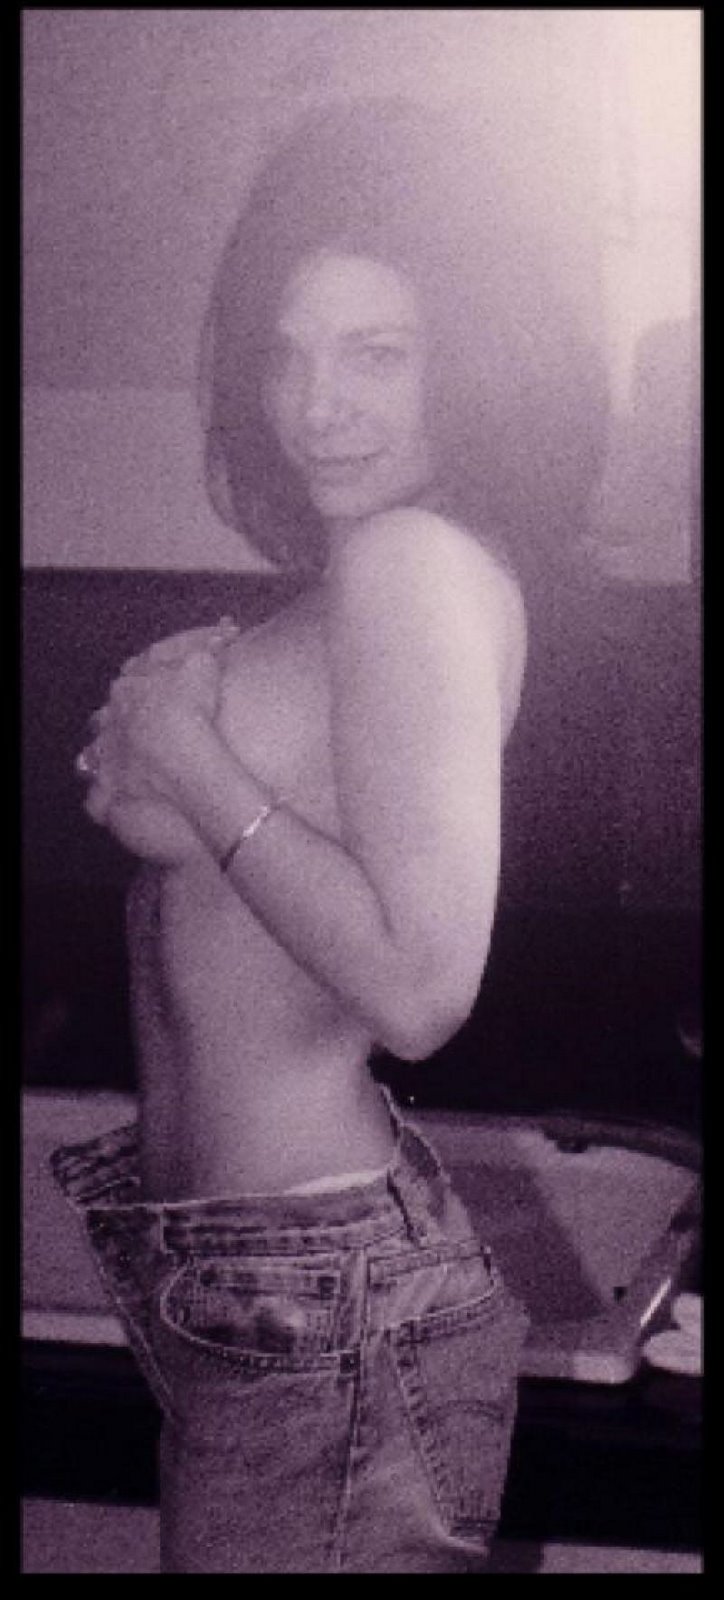 meredith-salenger-nude-myspace-02.jpg (image). meredith-salenger-nude-mys.....